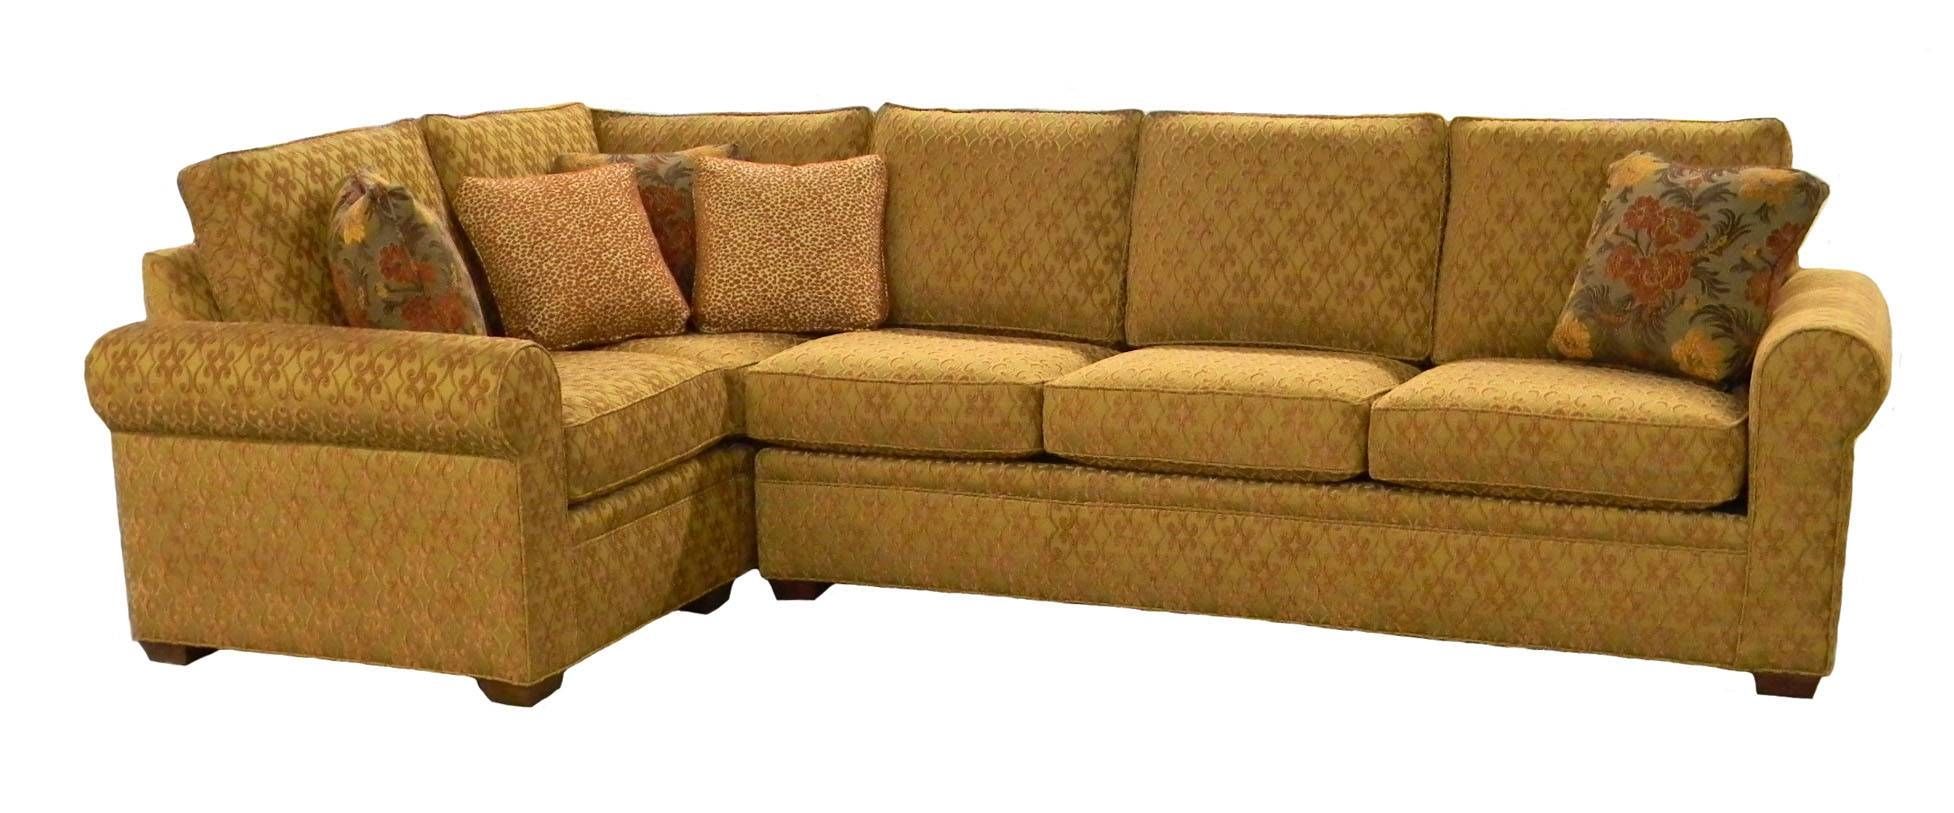 Sectional Sofas Cincinnati – Leather Sectional Sofa Within Sofas Cincinnati (View 16 of 25)